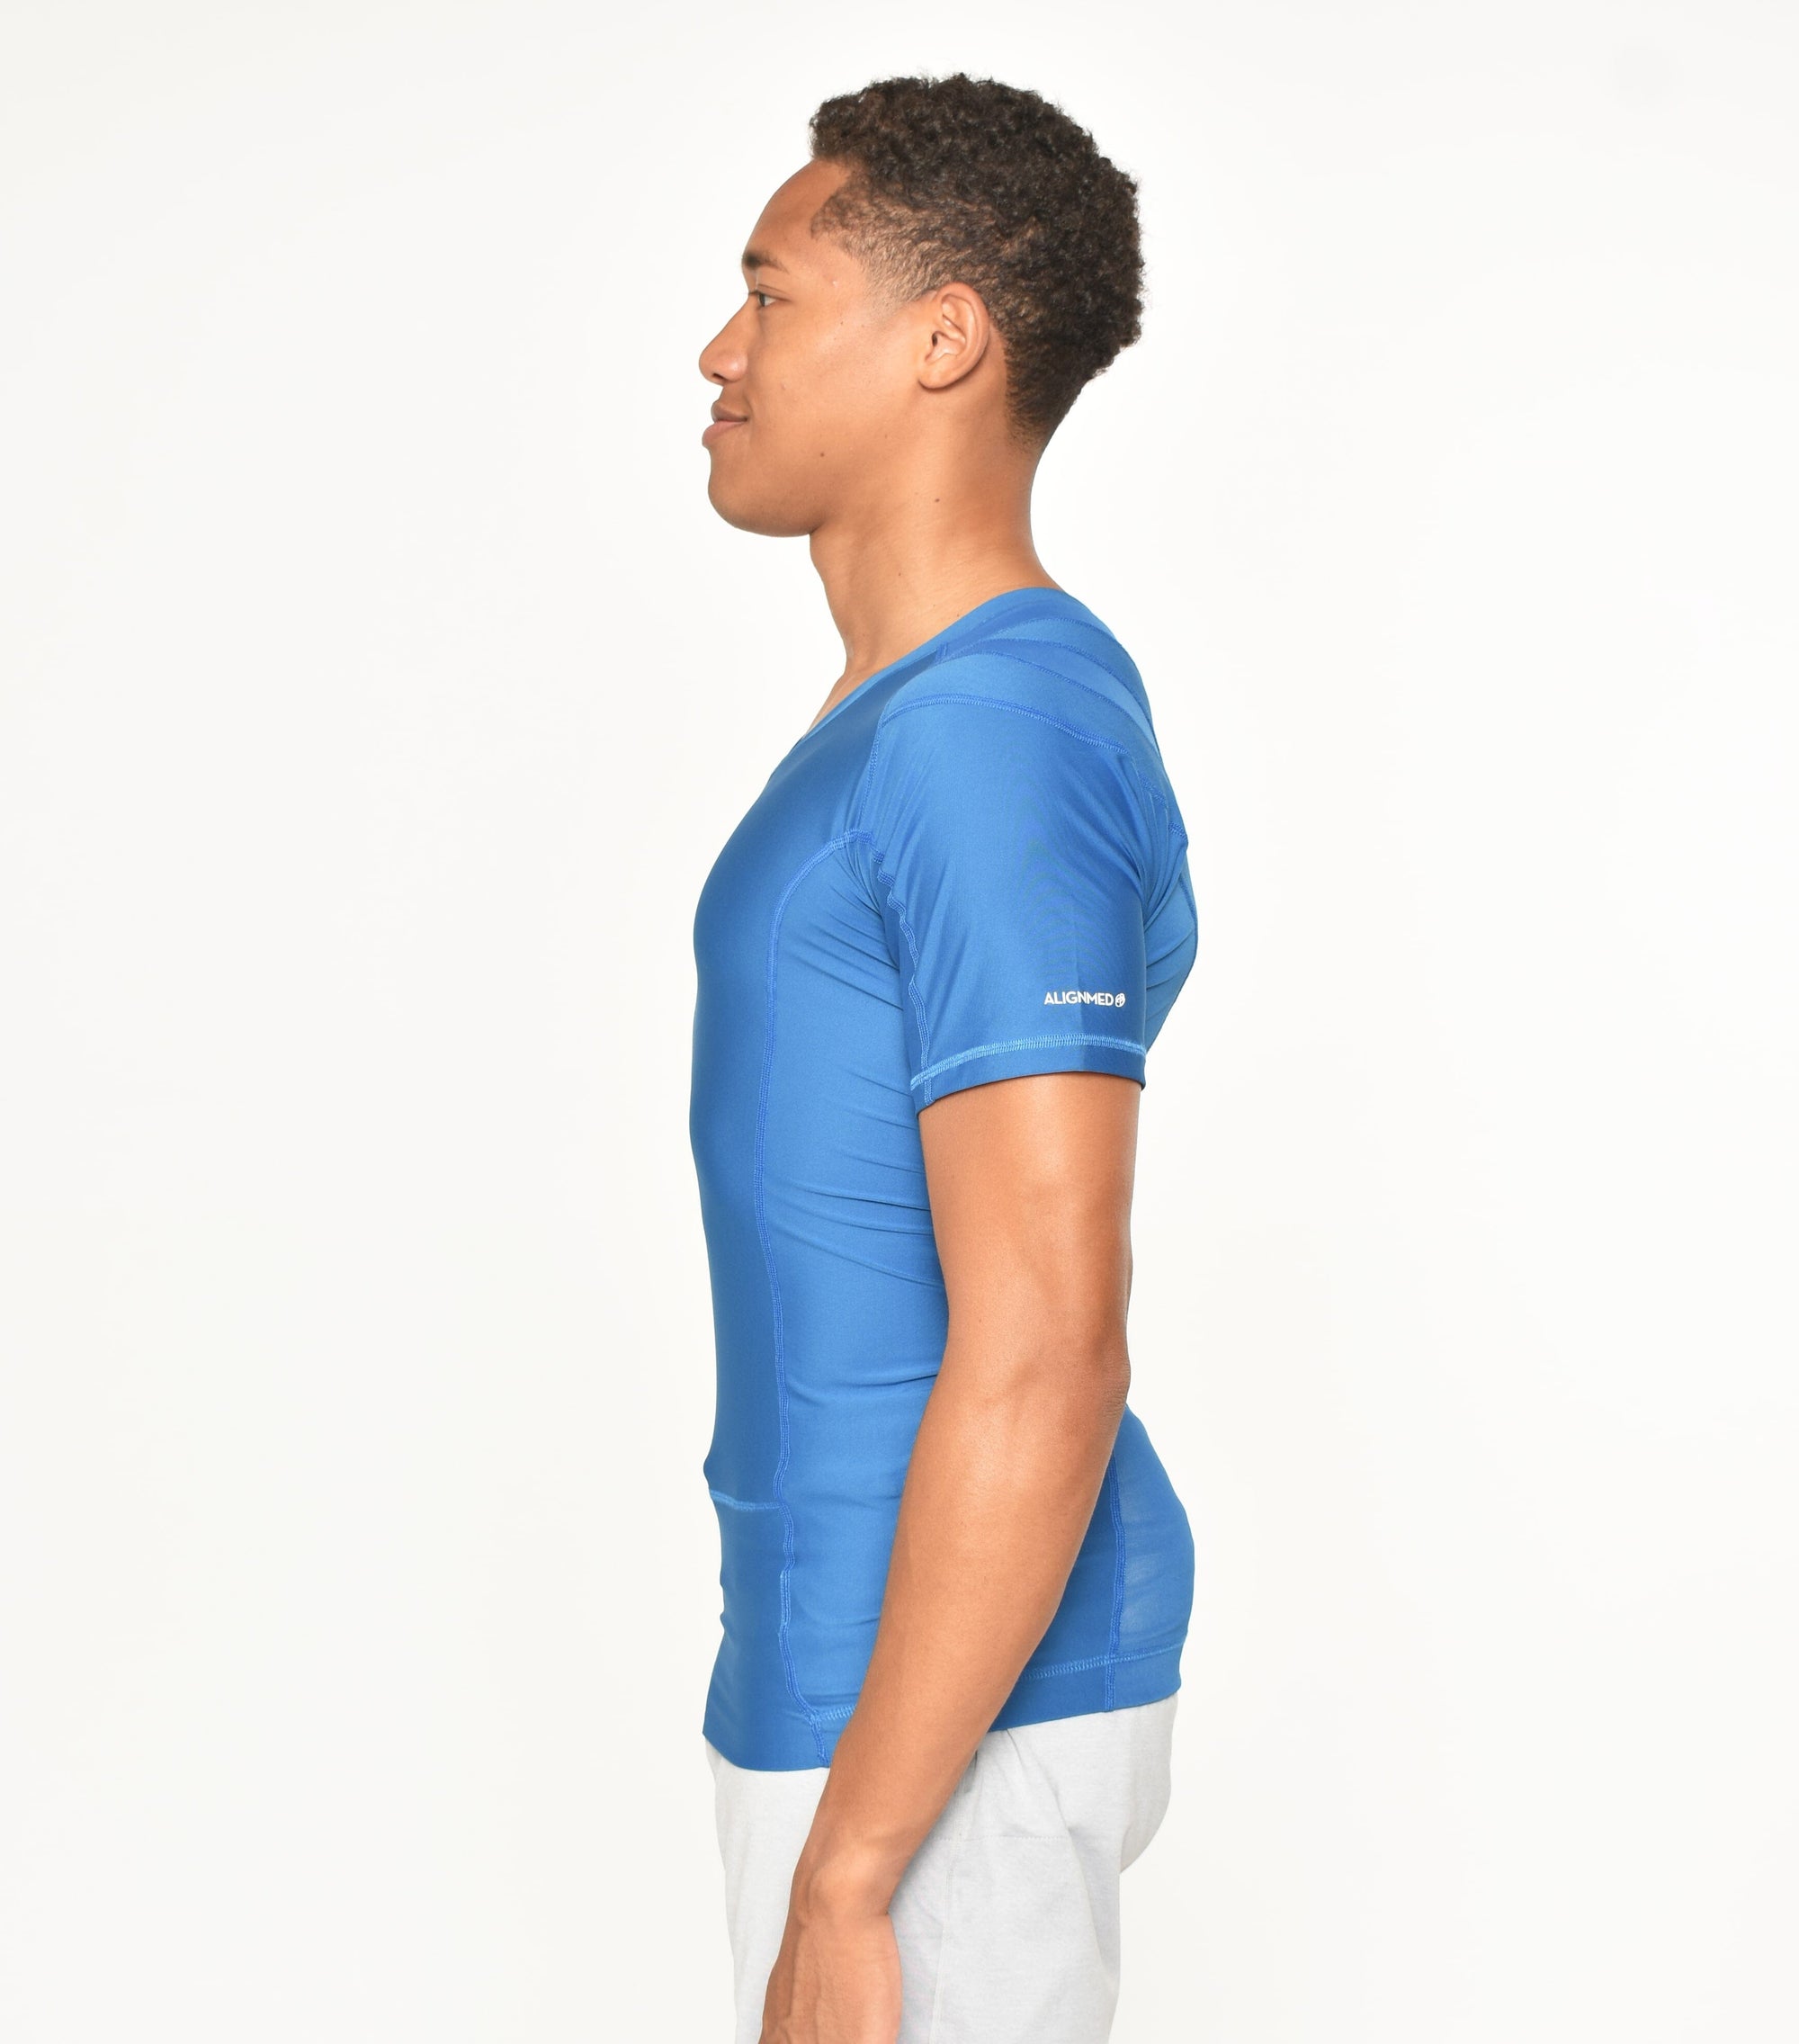 Alignmed Posture Shirt - Interesting Option